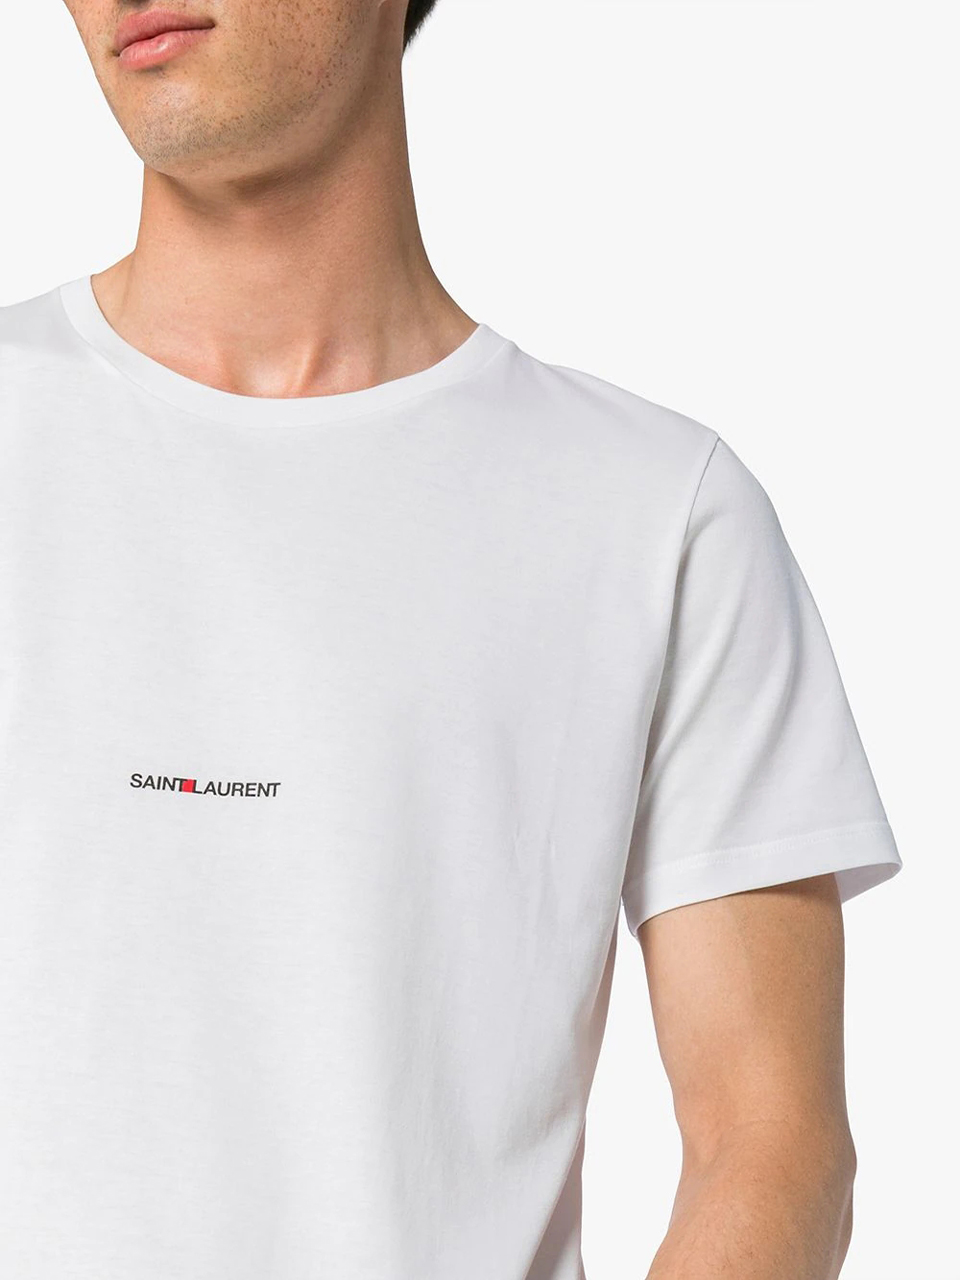 Imagem de: Camiseta Saint Laurent Branca com Logo